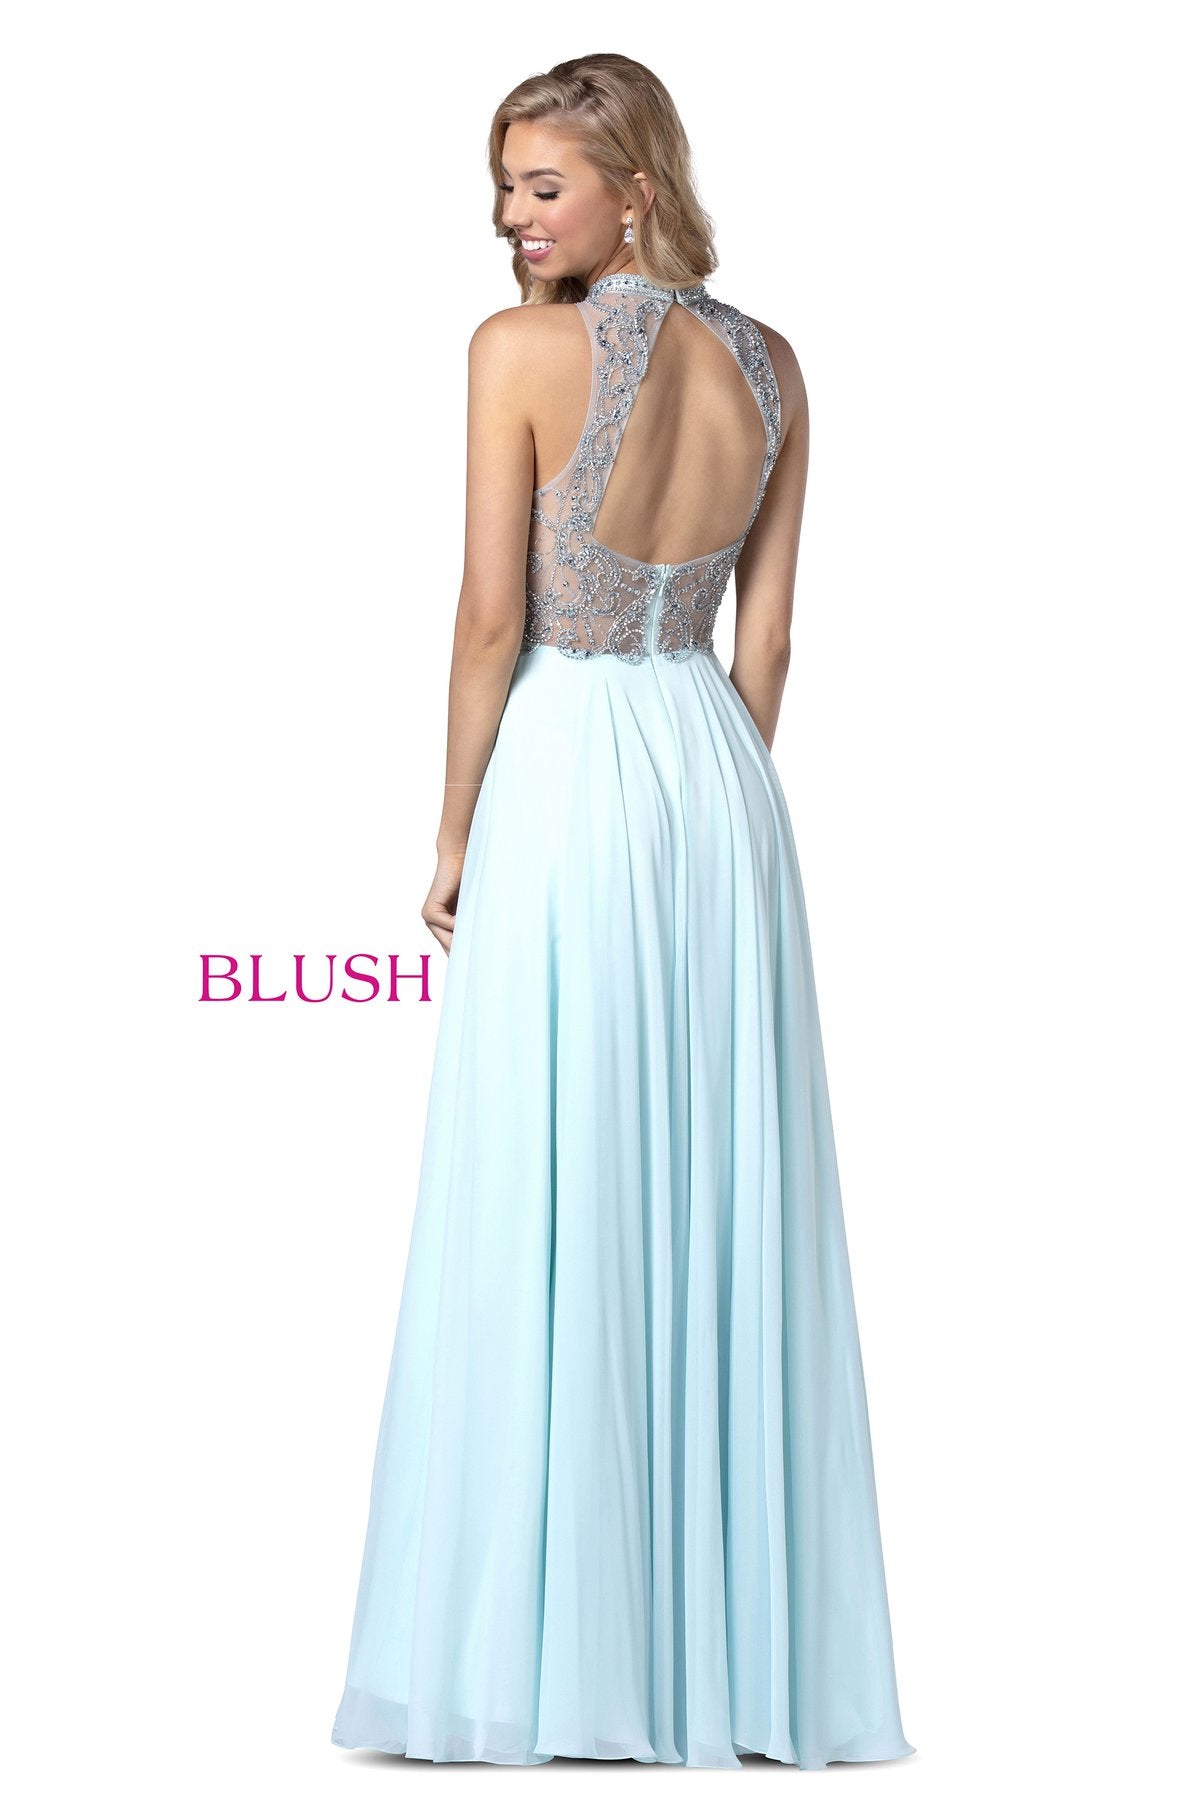 Blush Prom 11942 Size 10 White Chiffon A Line Prom Dress Embellished High Neckline 2020